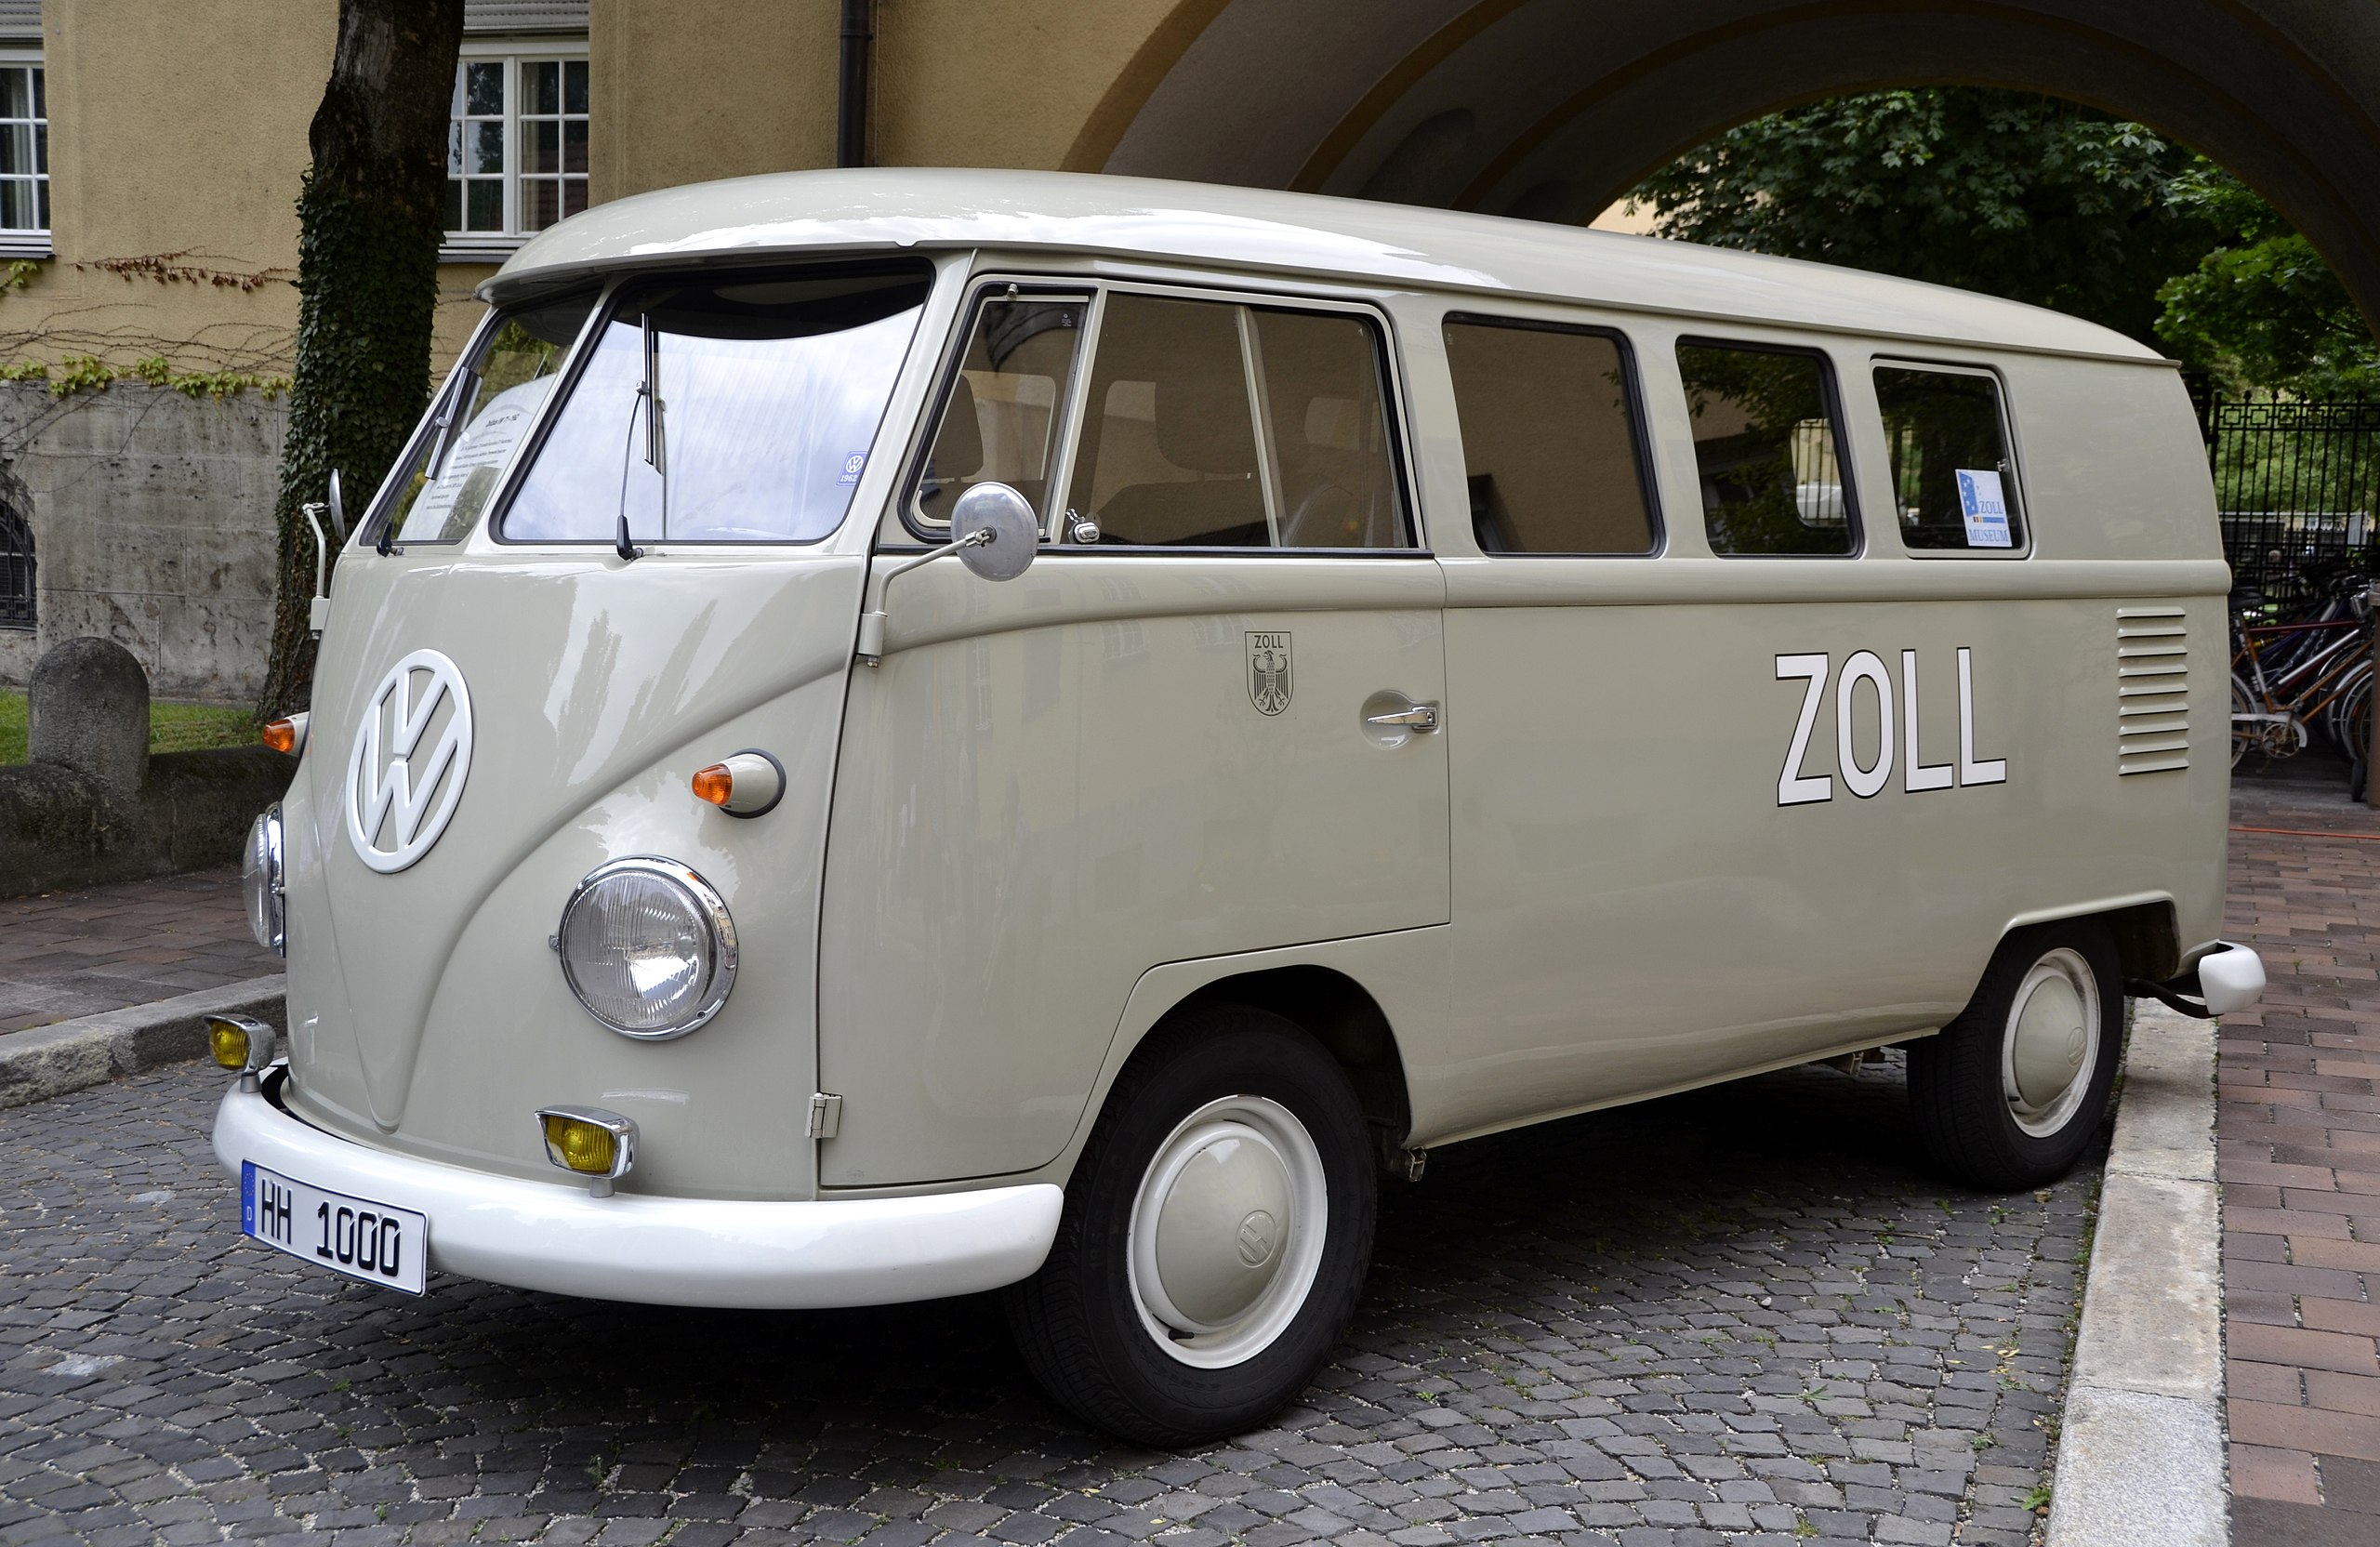 File:Zollbus VW T1 from 1962.JPG - Wikimedia Commons